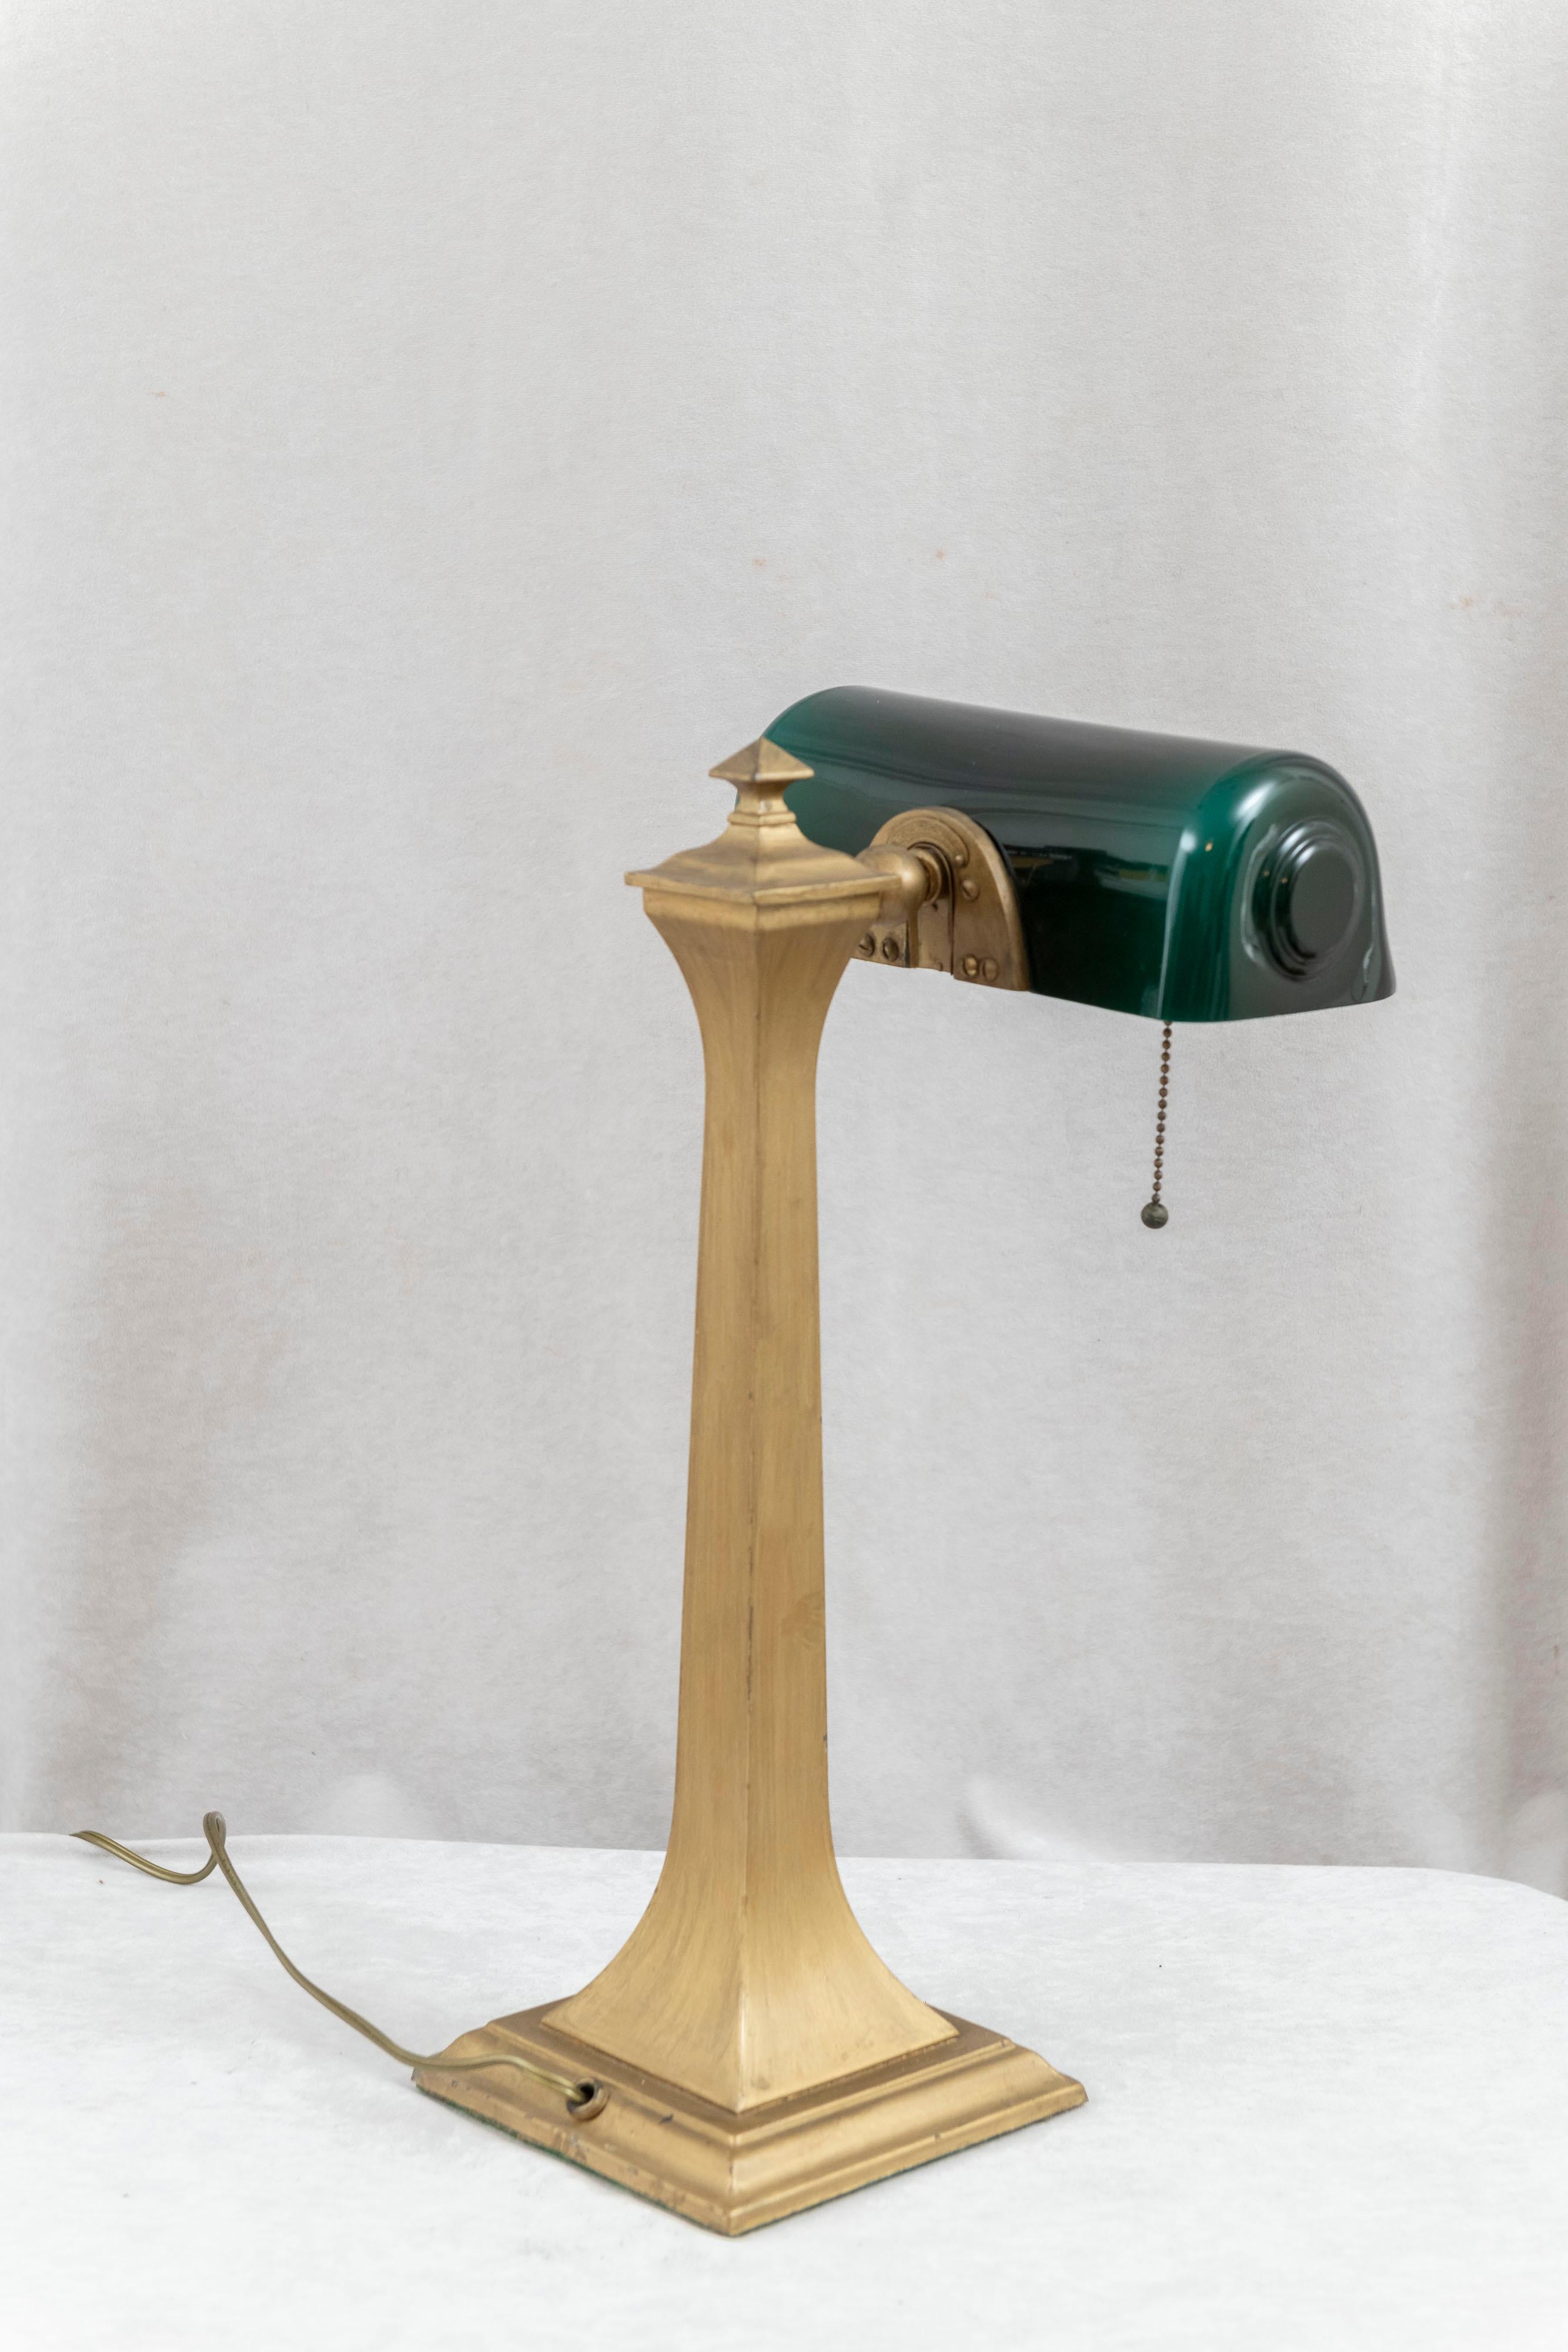 Patinated Antique Banker's Desk Lamp by Verdelite, Original Green Shade, ca. 1917